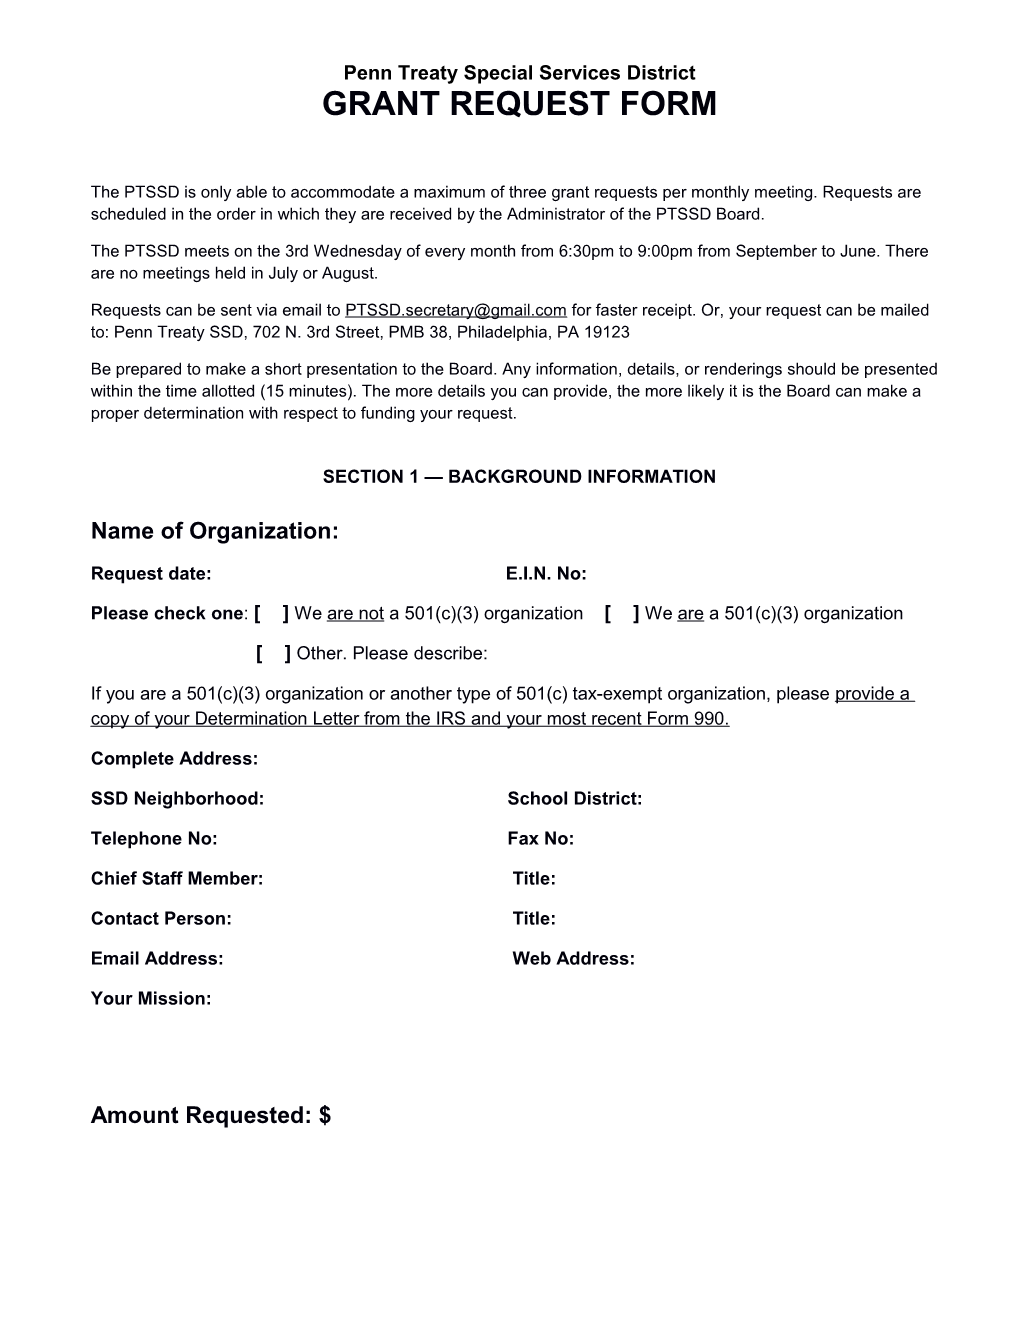 PTSSD Grant Request Form - 2014 Update (097682-2)